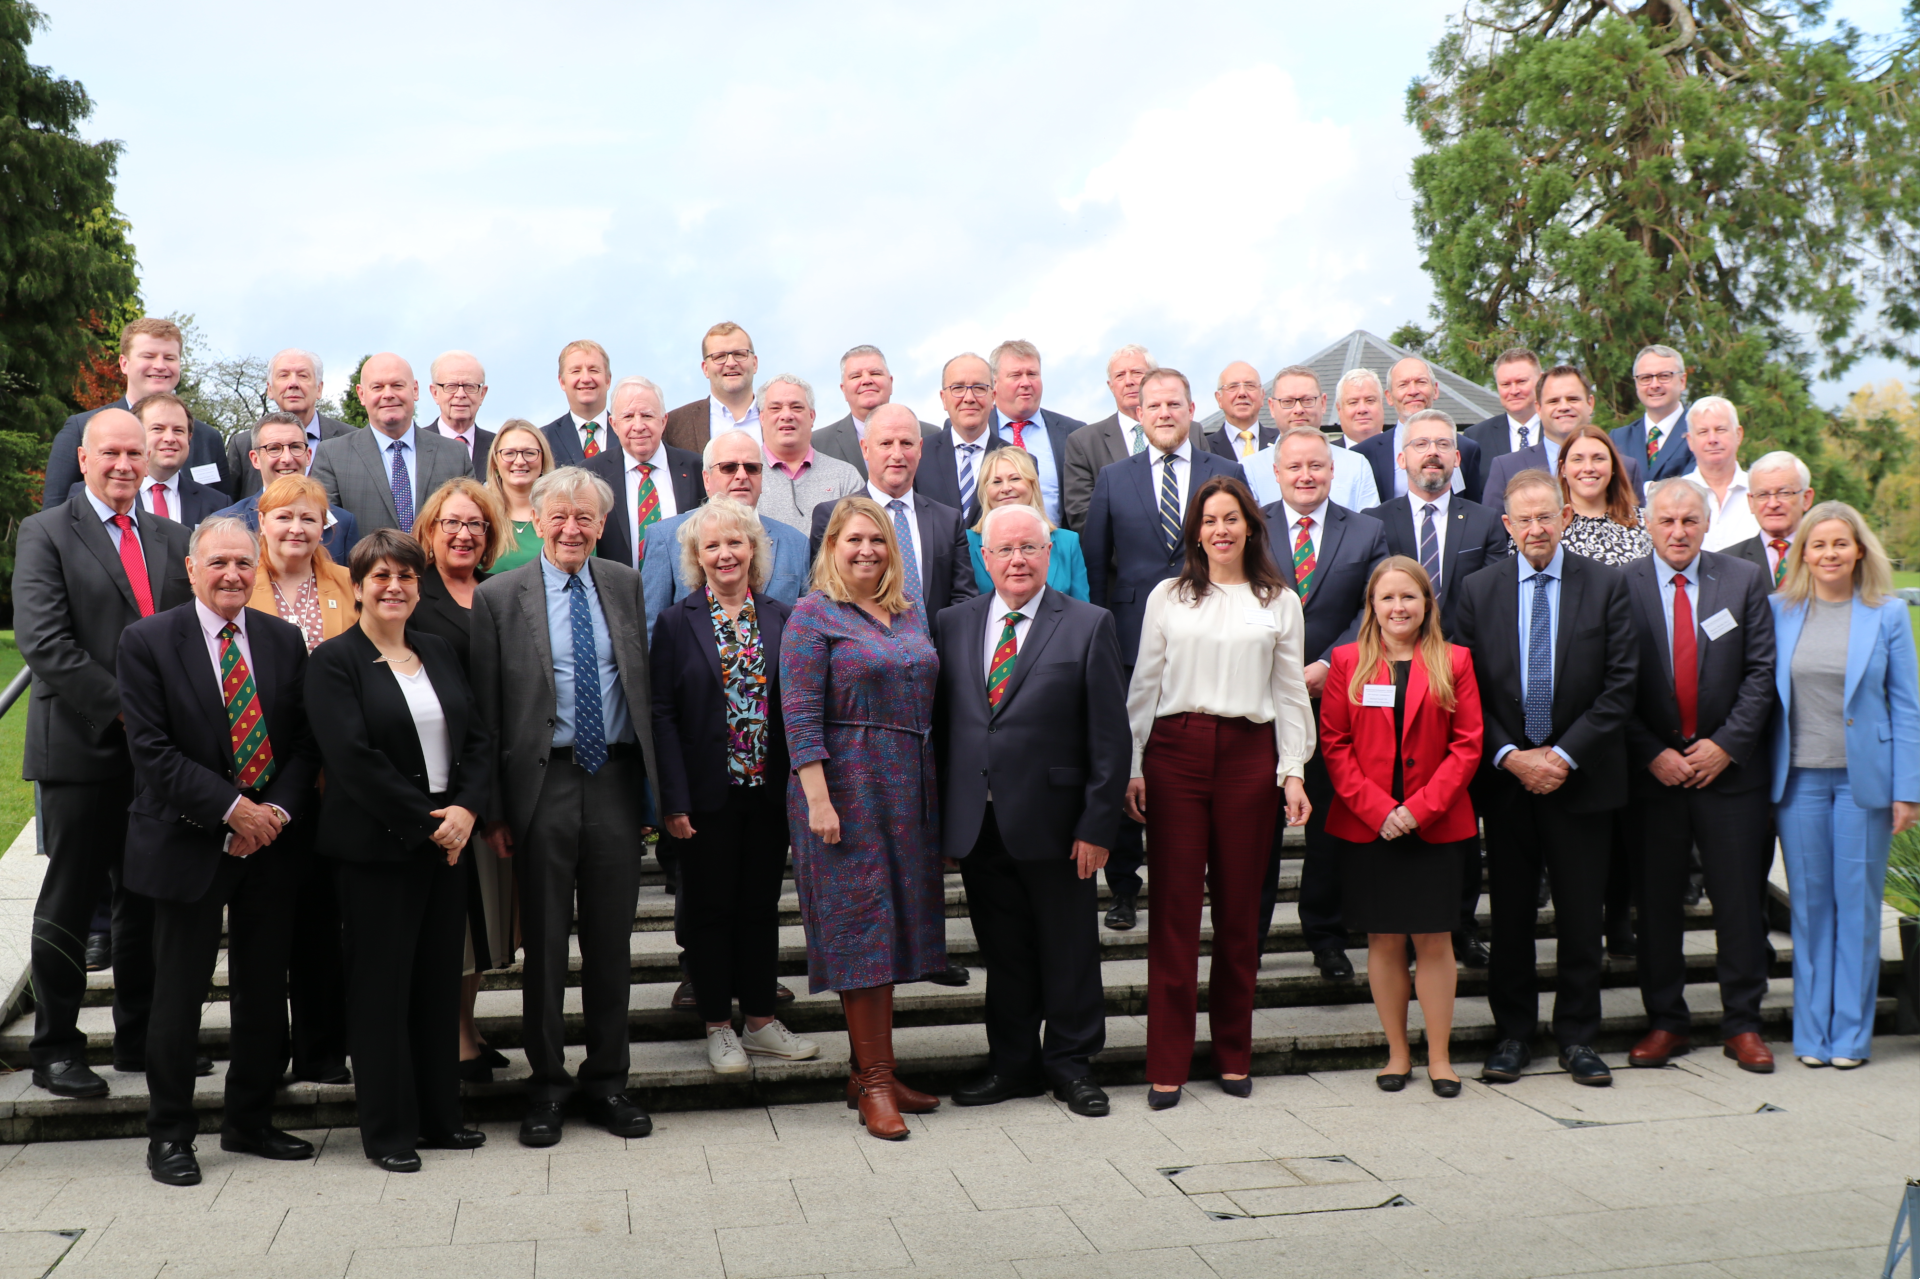 Members of the British-Irish Parliamentary Assembly (BIPA) marking the end of the 62nd plenary session on 25 October 2022 in Cavan, Ireland. ©British-Irish Parliamentary Assembly